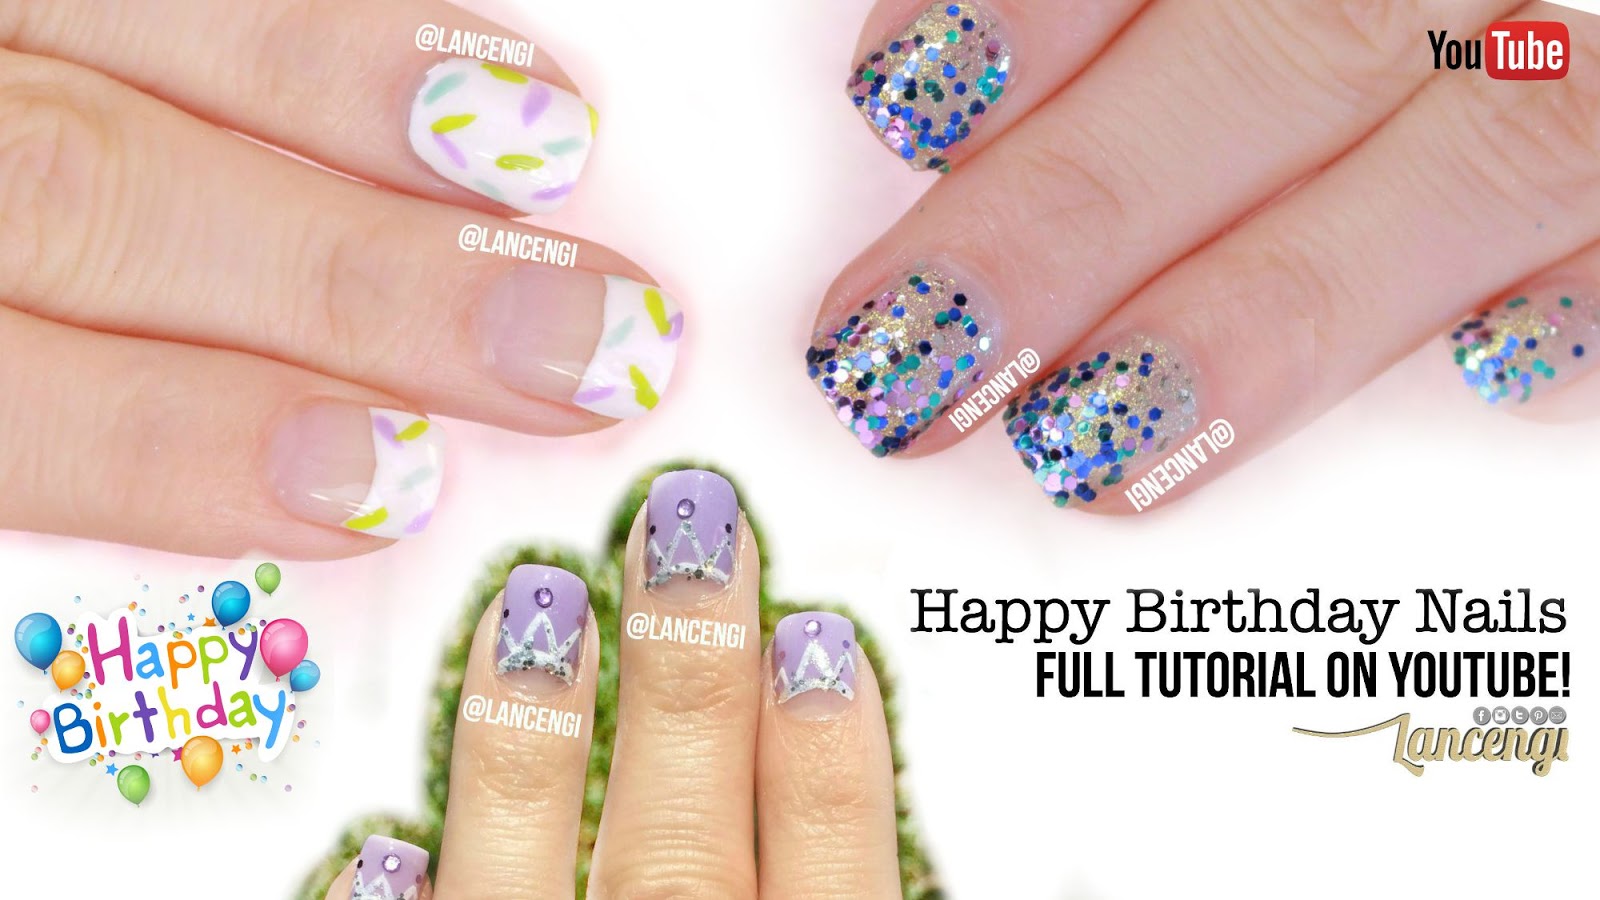 2. Fun and festive birthday nail designs - wide 2